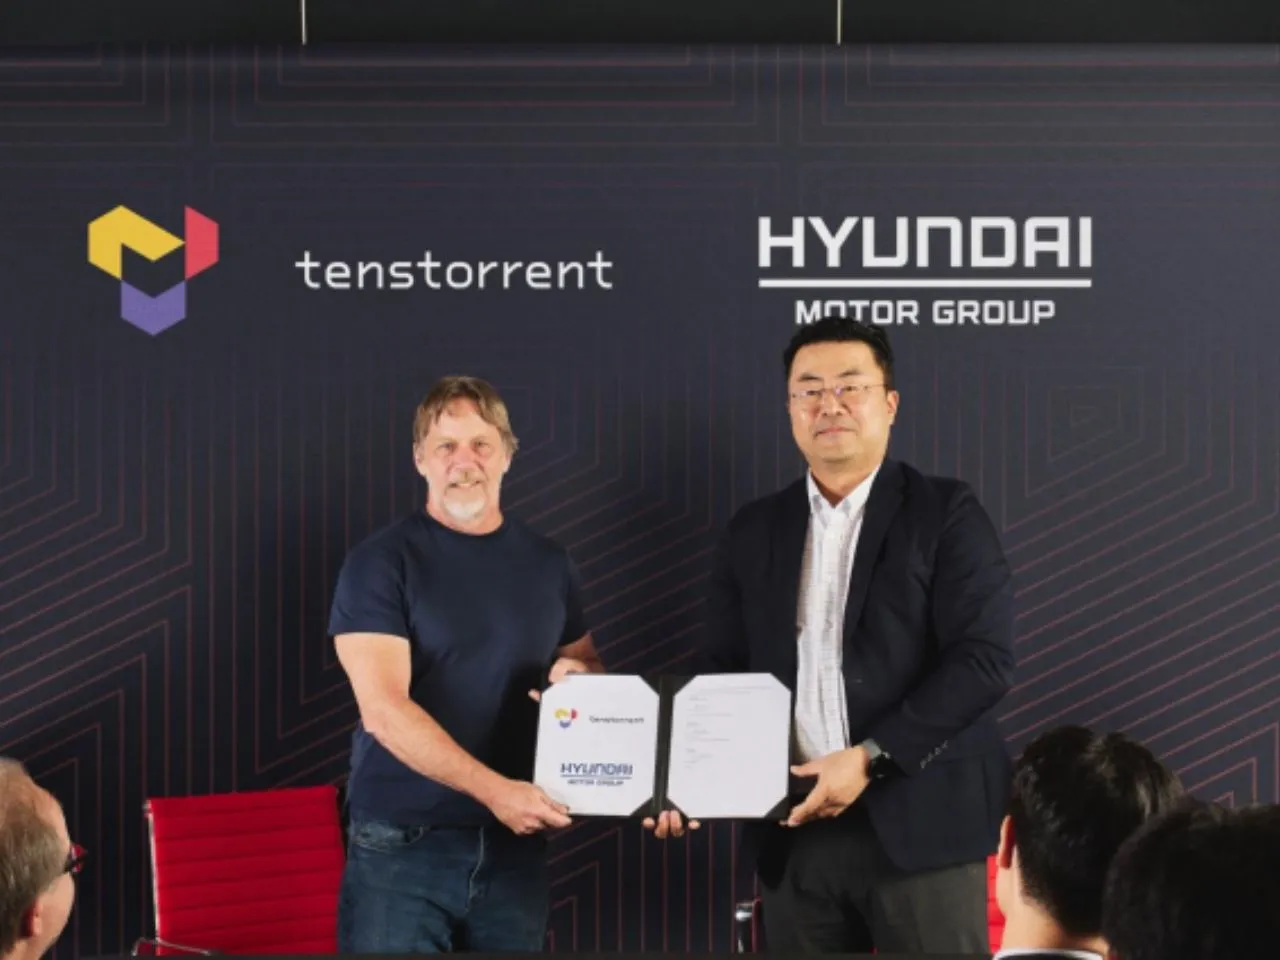 Tenstorrent Raises $100M Led by Hyundai Motor Group & Samsung Fund